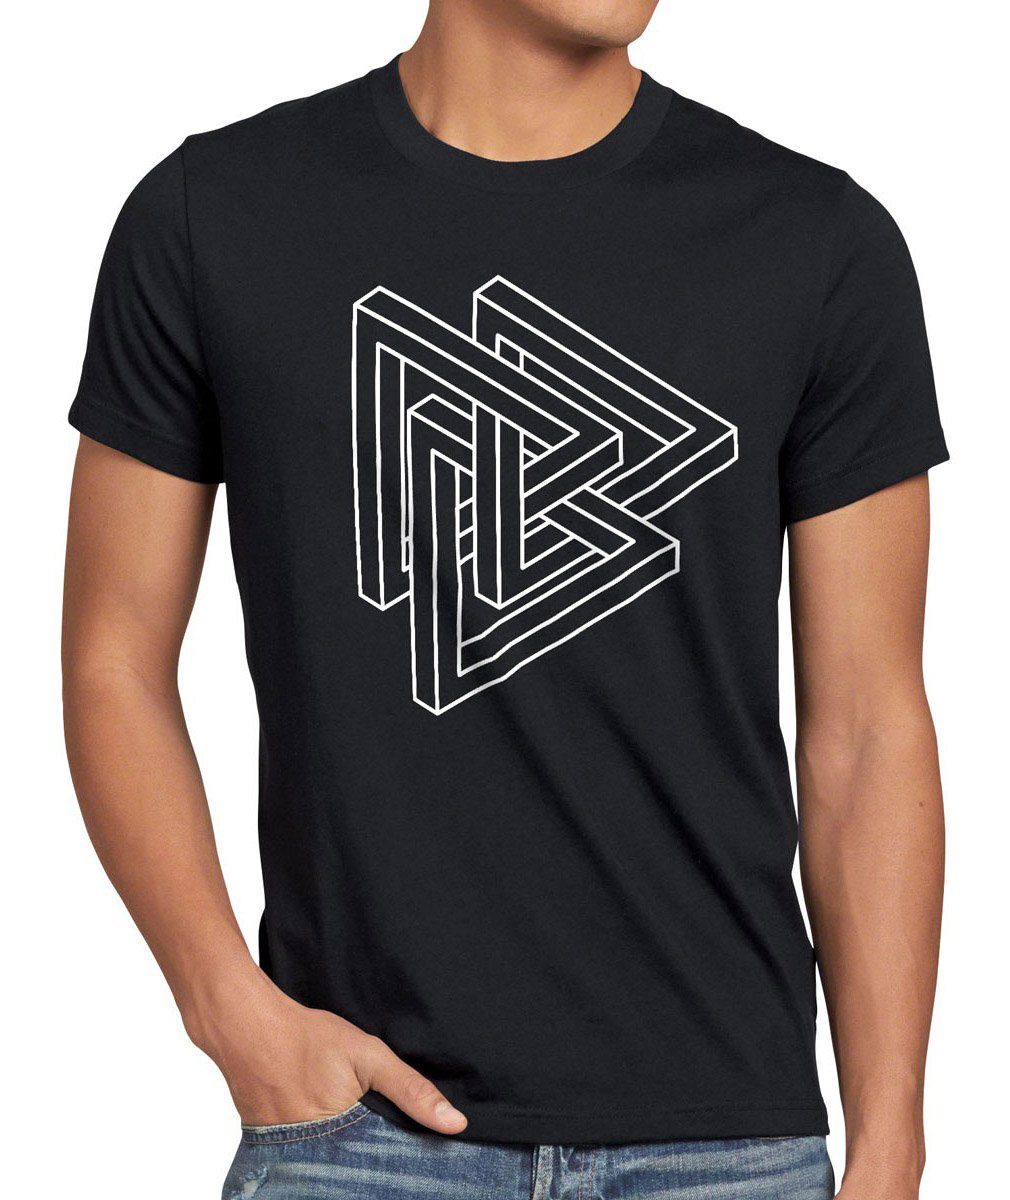 style3 Print-Shirt Herren Sheldon Bang Cooper T-Shirt Theory geo Würfel schwarz Big Dreieck Escher Penrose